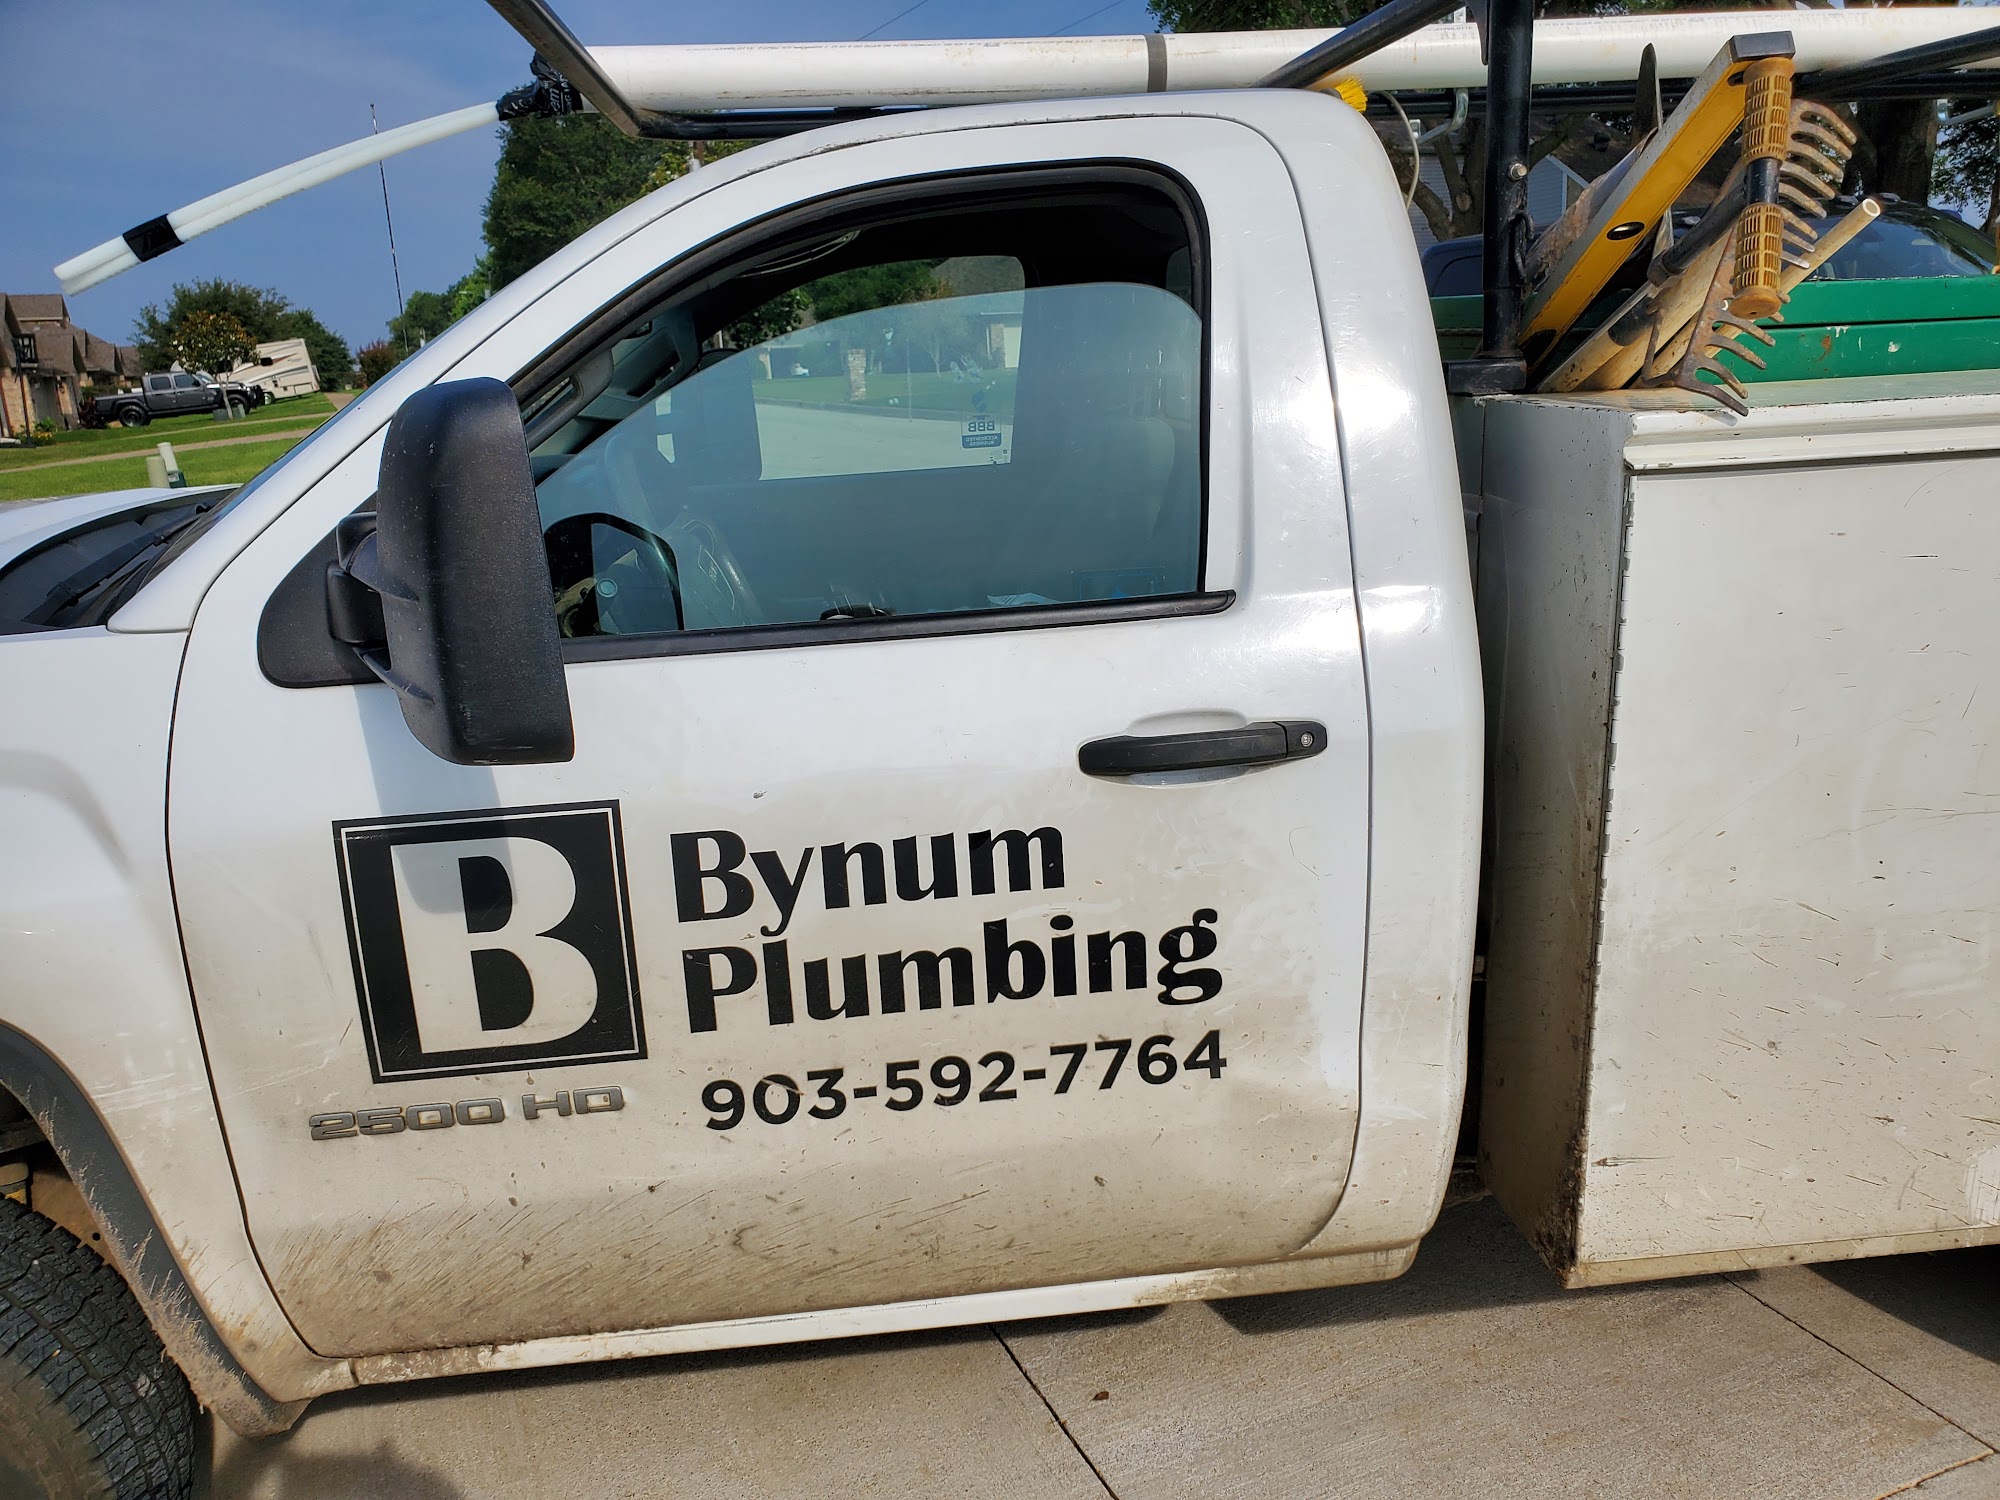 Bynum plumbing